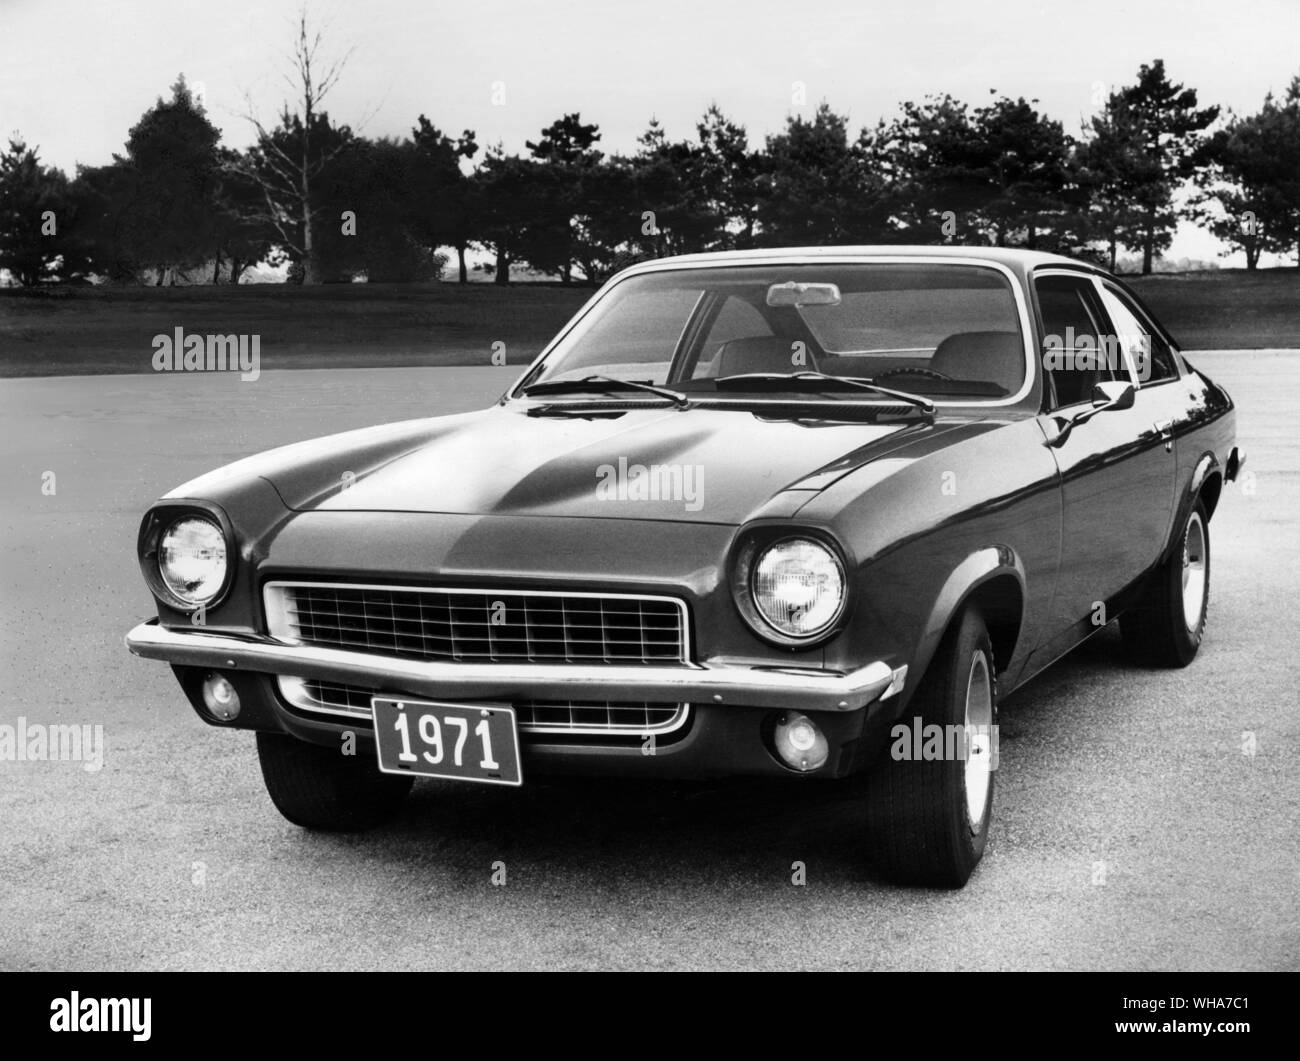 1971 Chevrolet Vega 2.3 litre coupe Stock Photo